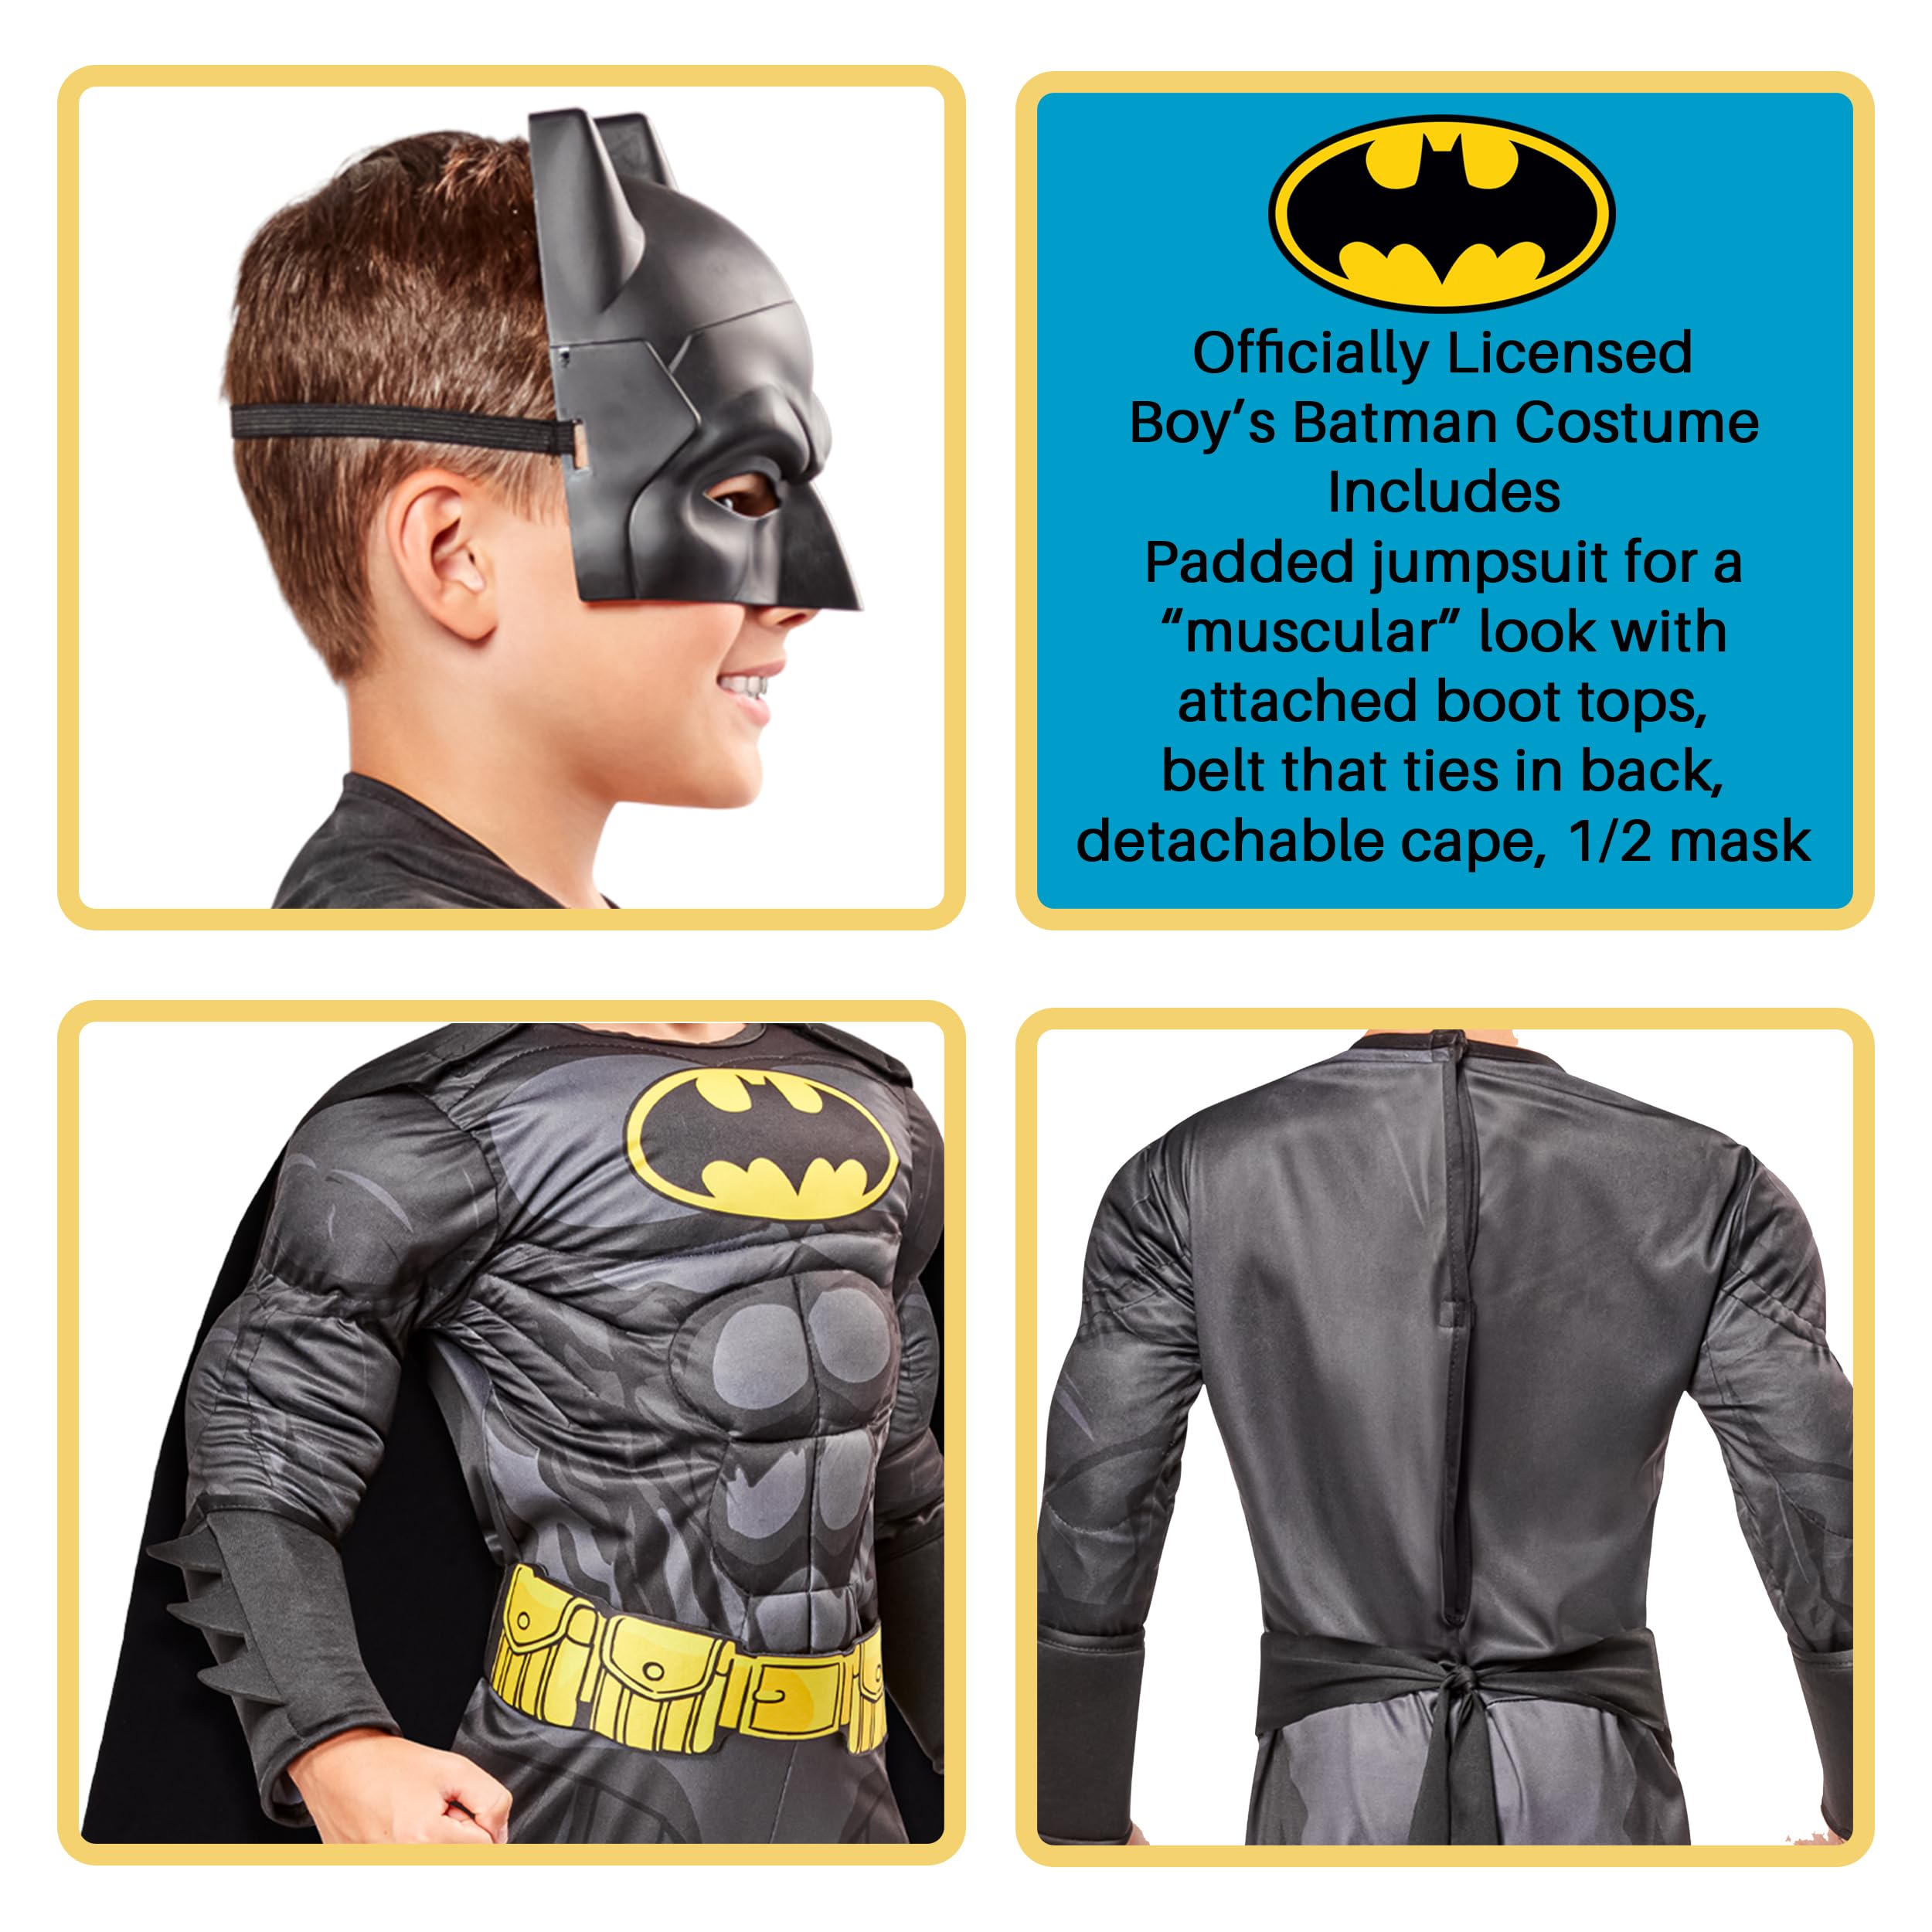 Rubie's Costume Boys DC Comics Deluxe Batman Costume